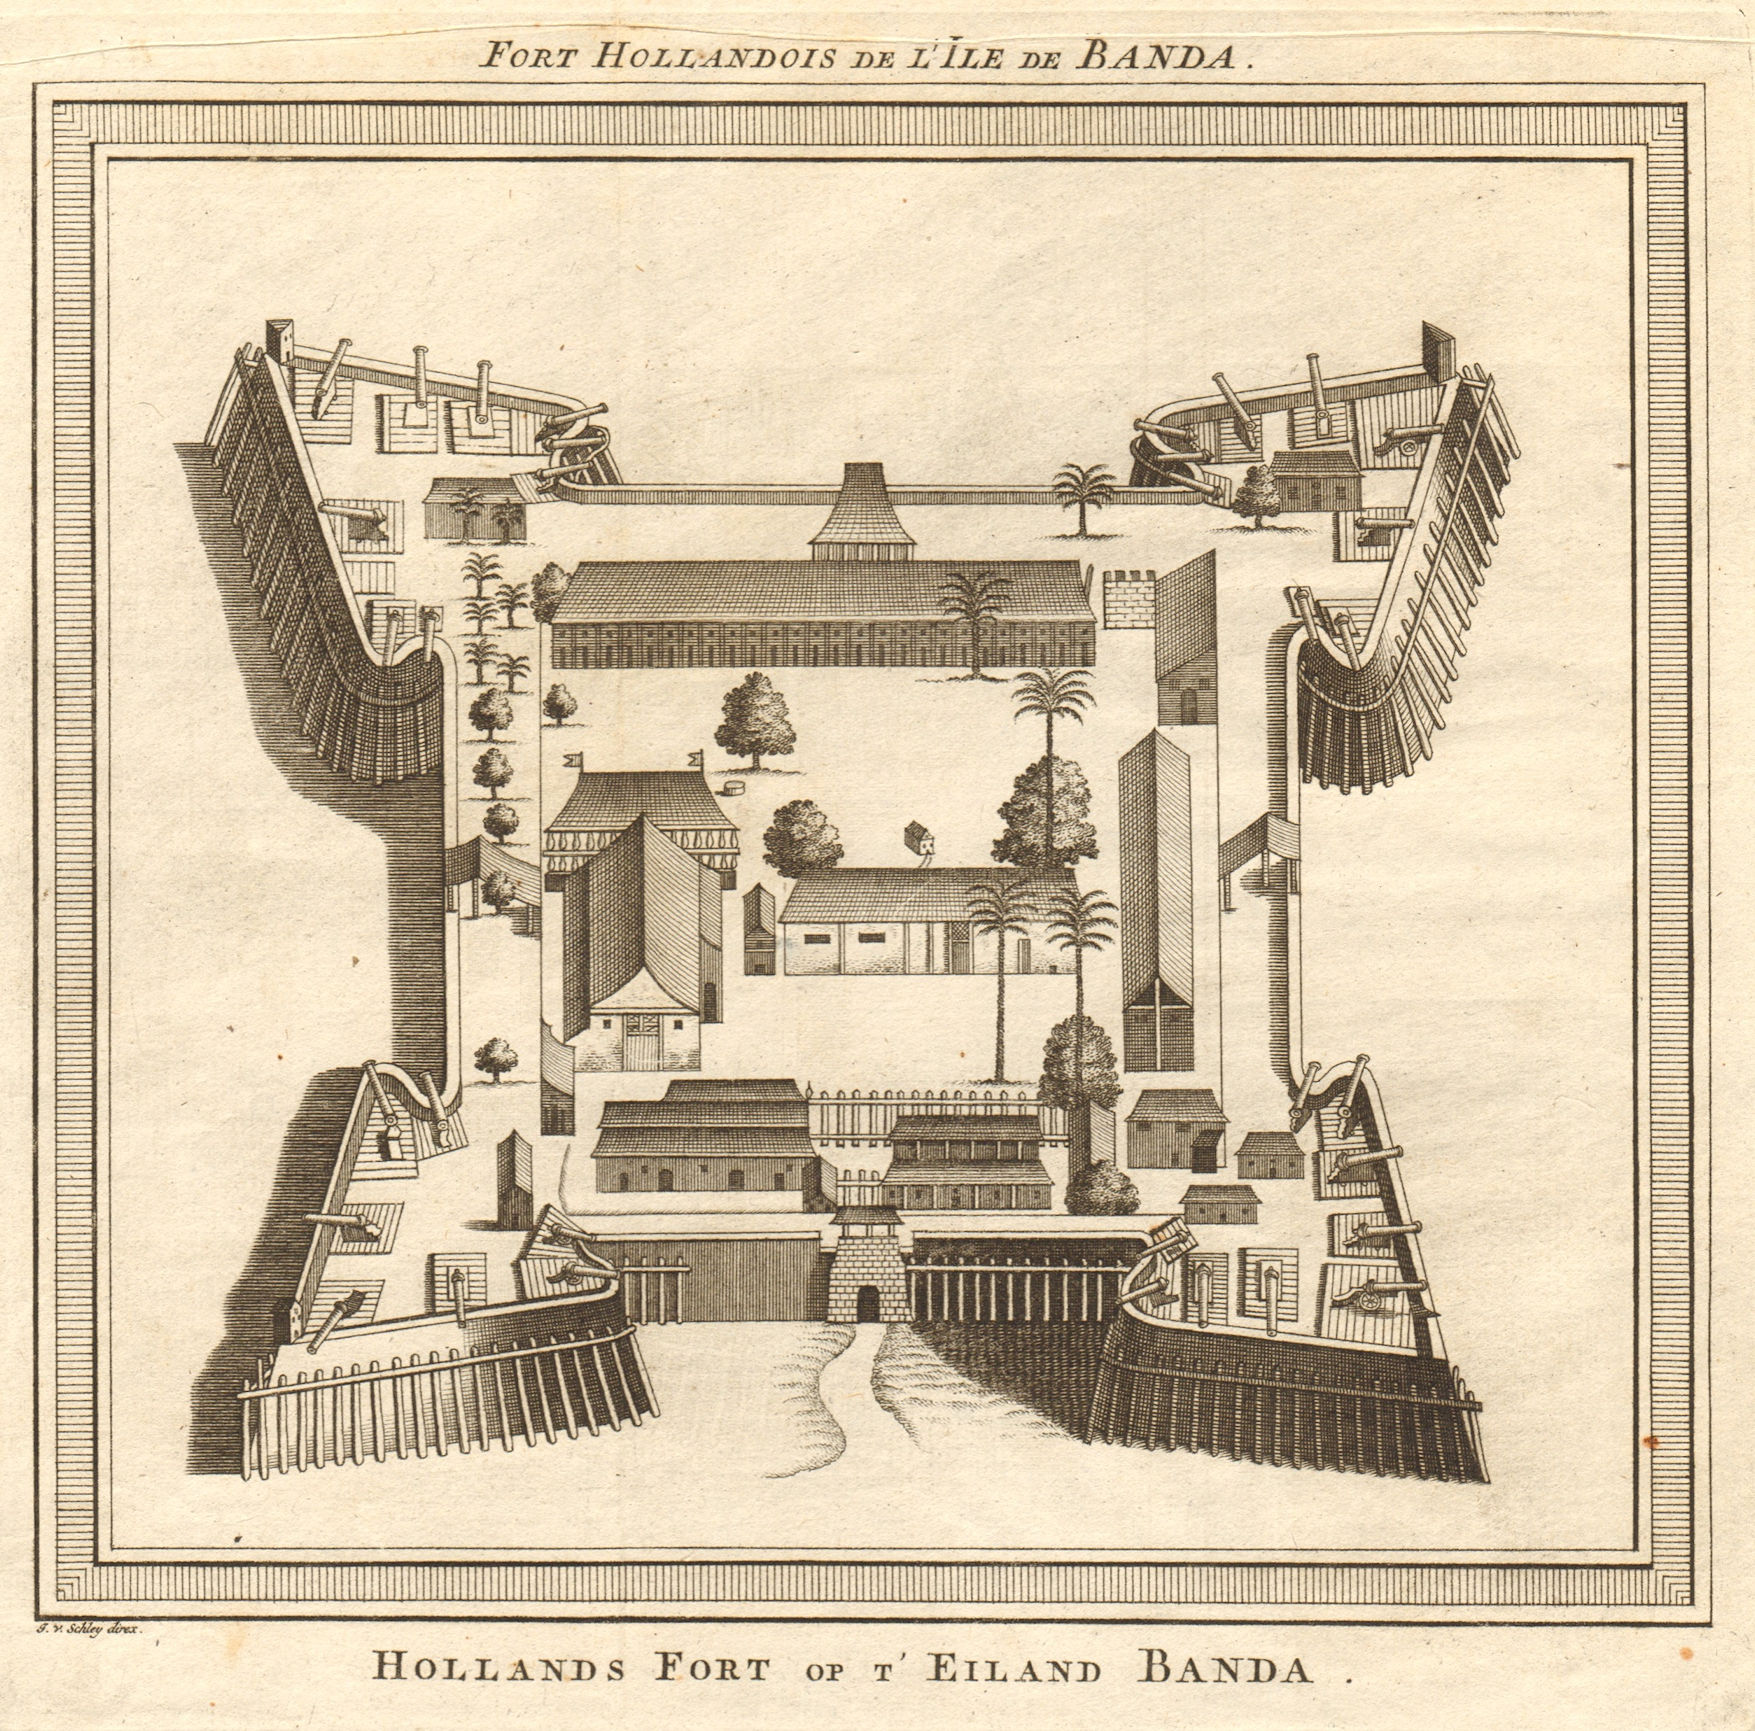 'Fort Hollandois, de l'Ile de Banda'. Ft Nassau, Maluku. BELLIN/SCHLEY 1753 map